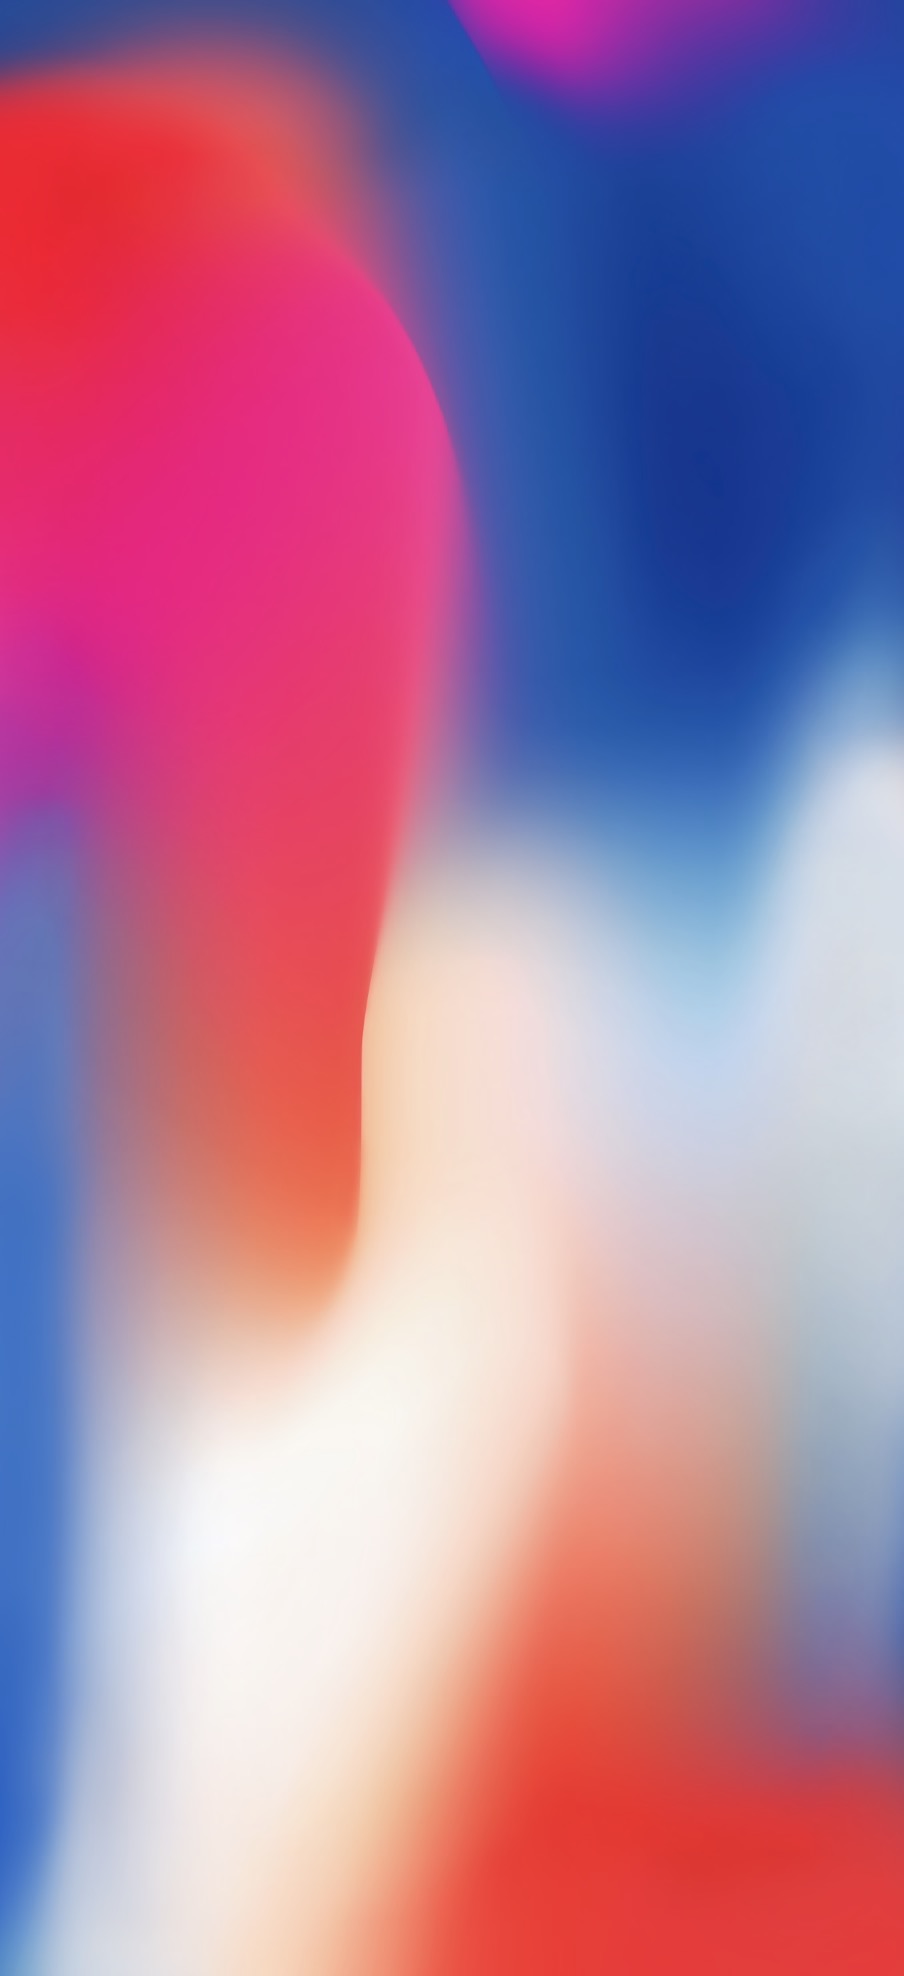 iPhone X Default LIVE Wallpaper (Pink) - iOS 11 Stock ...